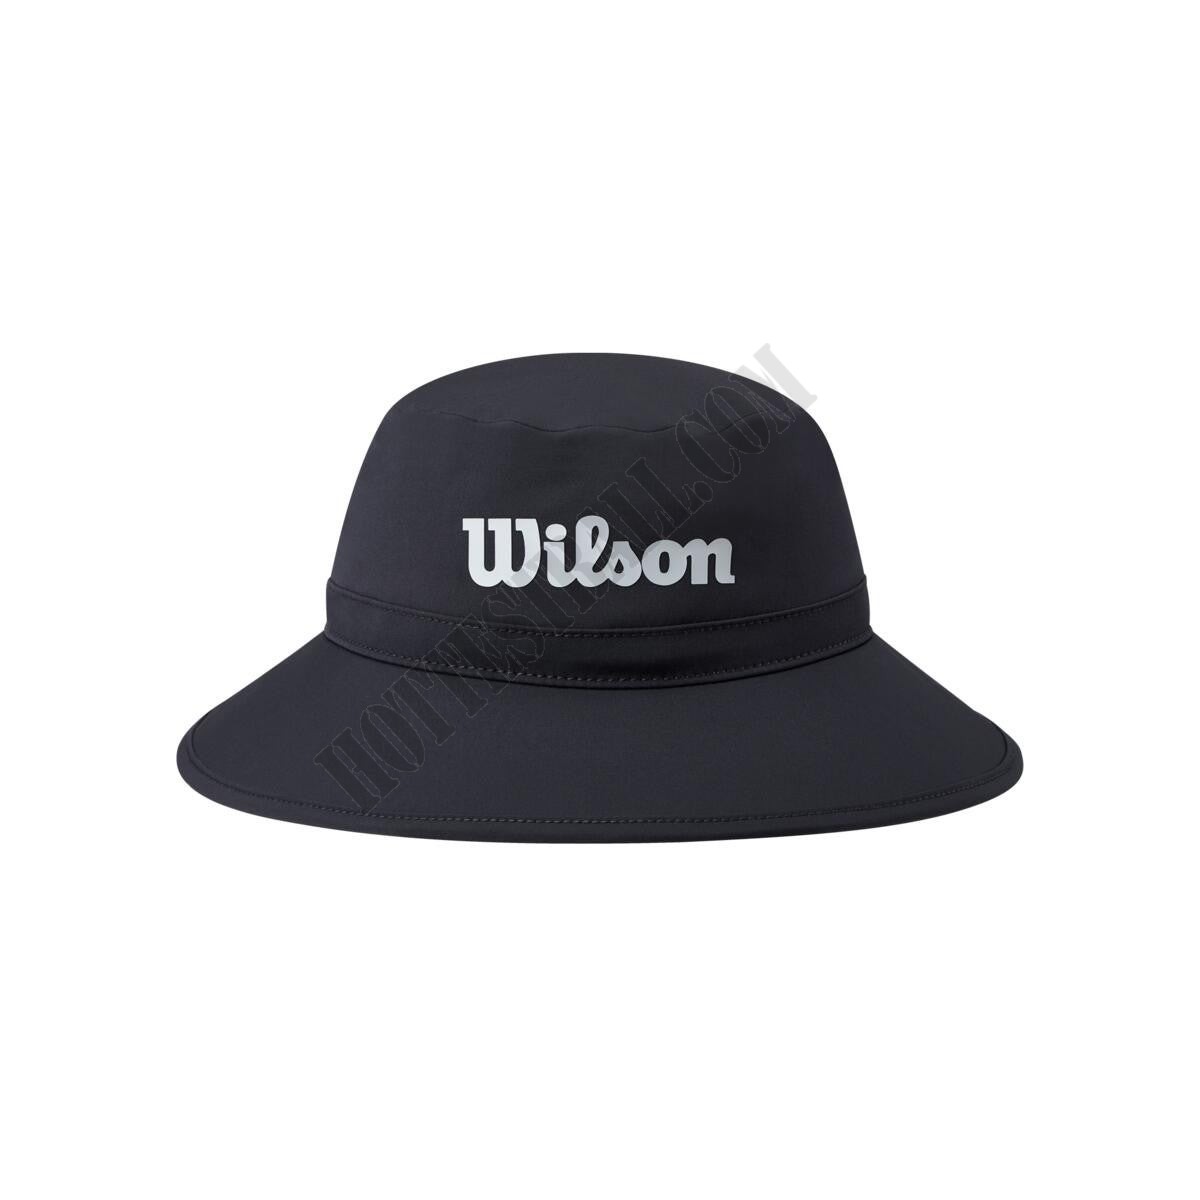 Wilson Rain Hat - Wilson Discount Store - Wilson Rain Hat - Wilson Discount Store